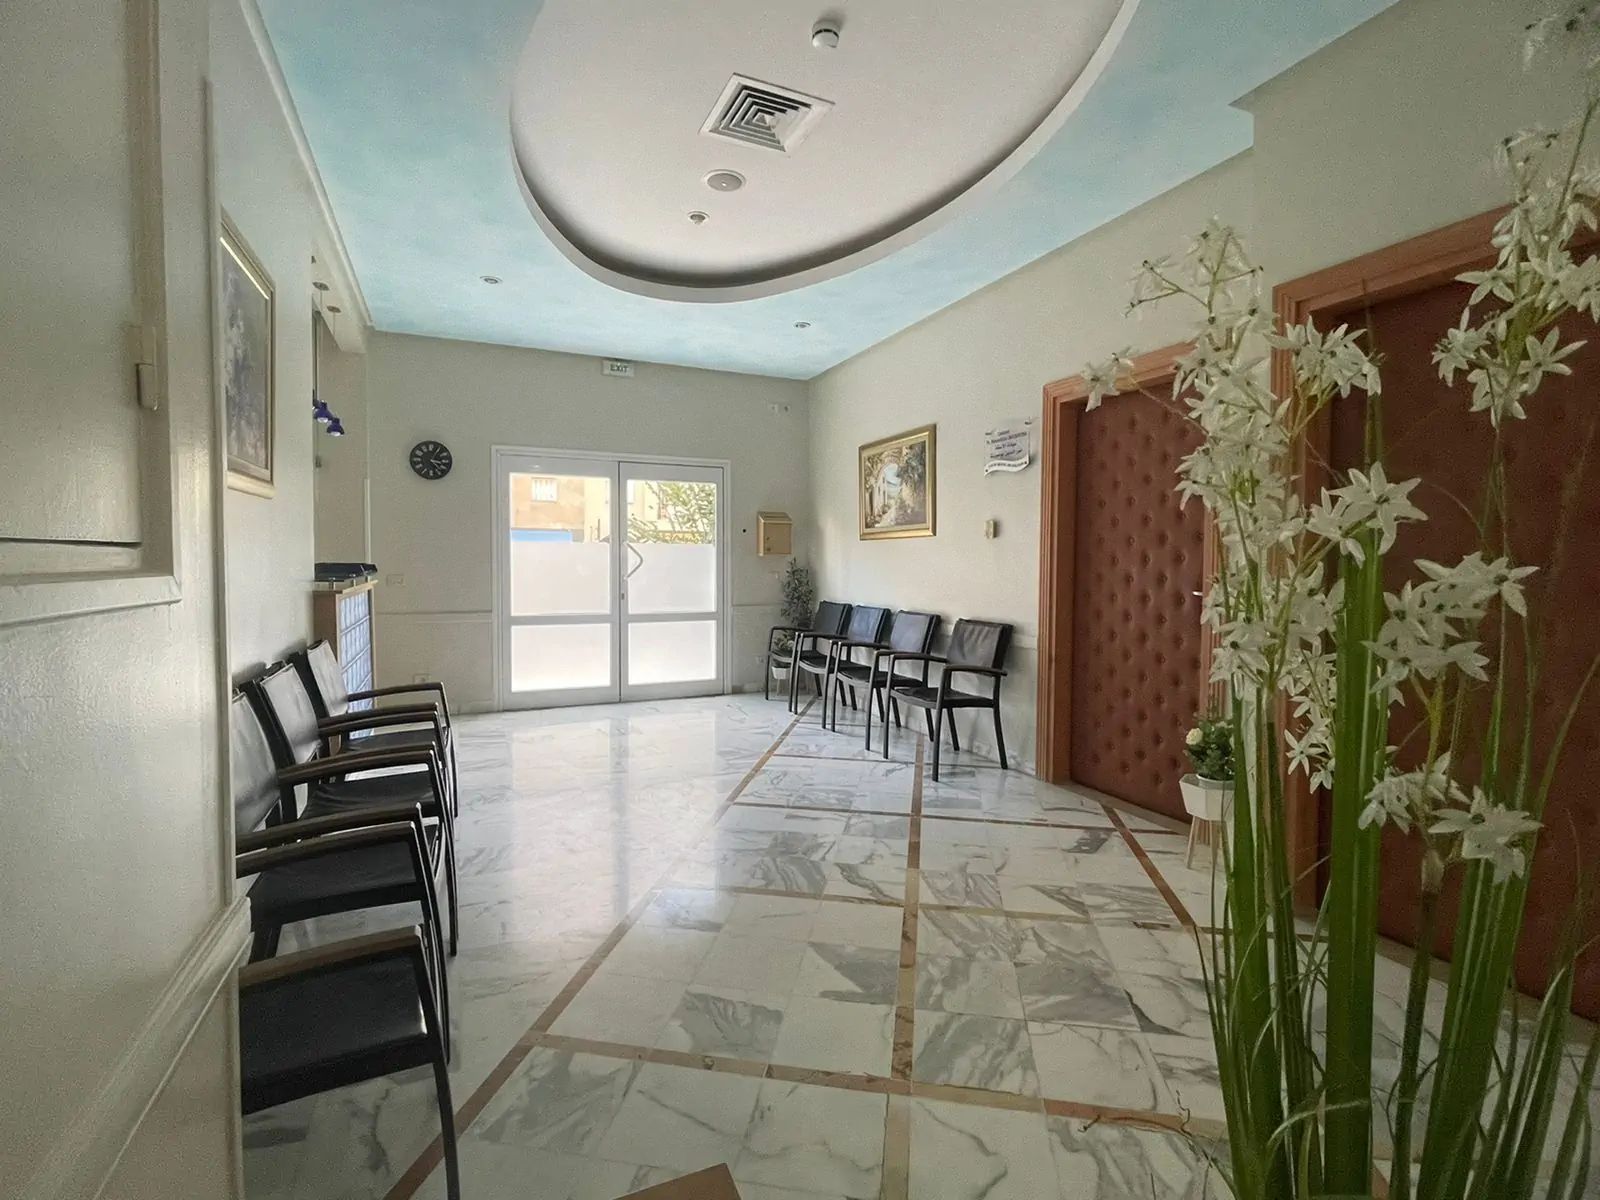 Ibn Khaldoun medical center Sousse Tunisia